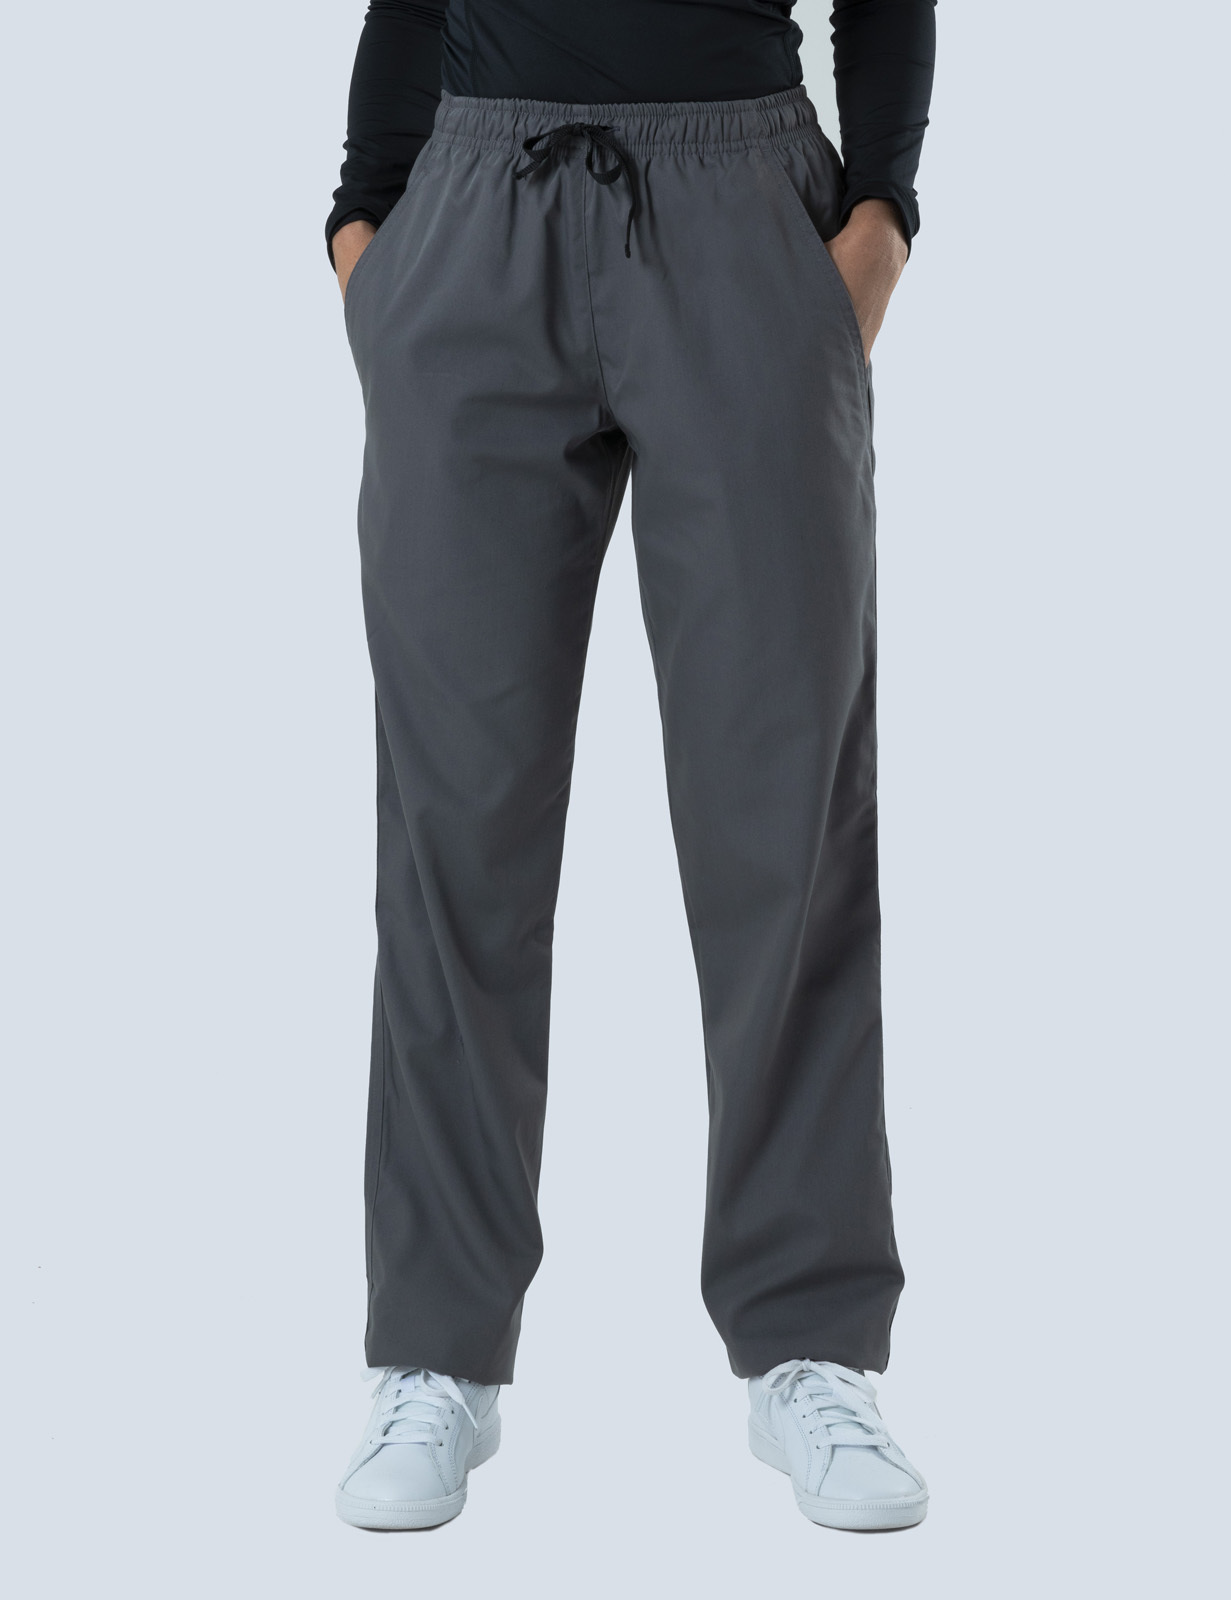 Women's Regular Cut Pants - Steel Grey - 5x Large